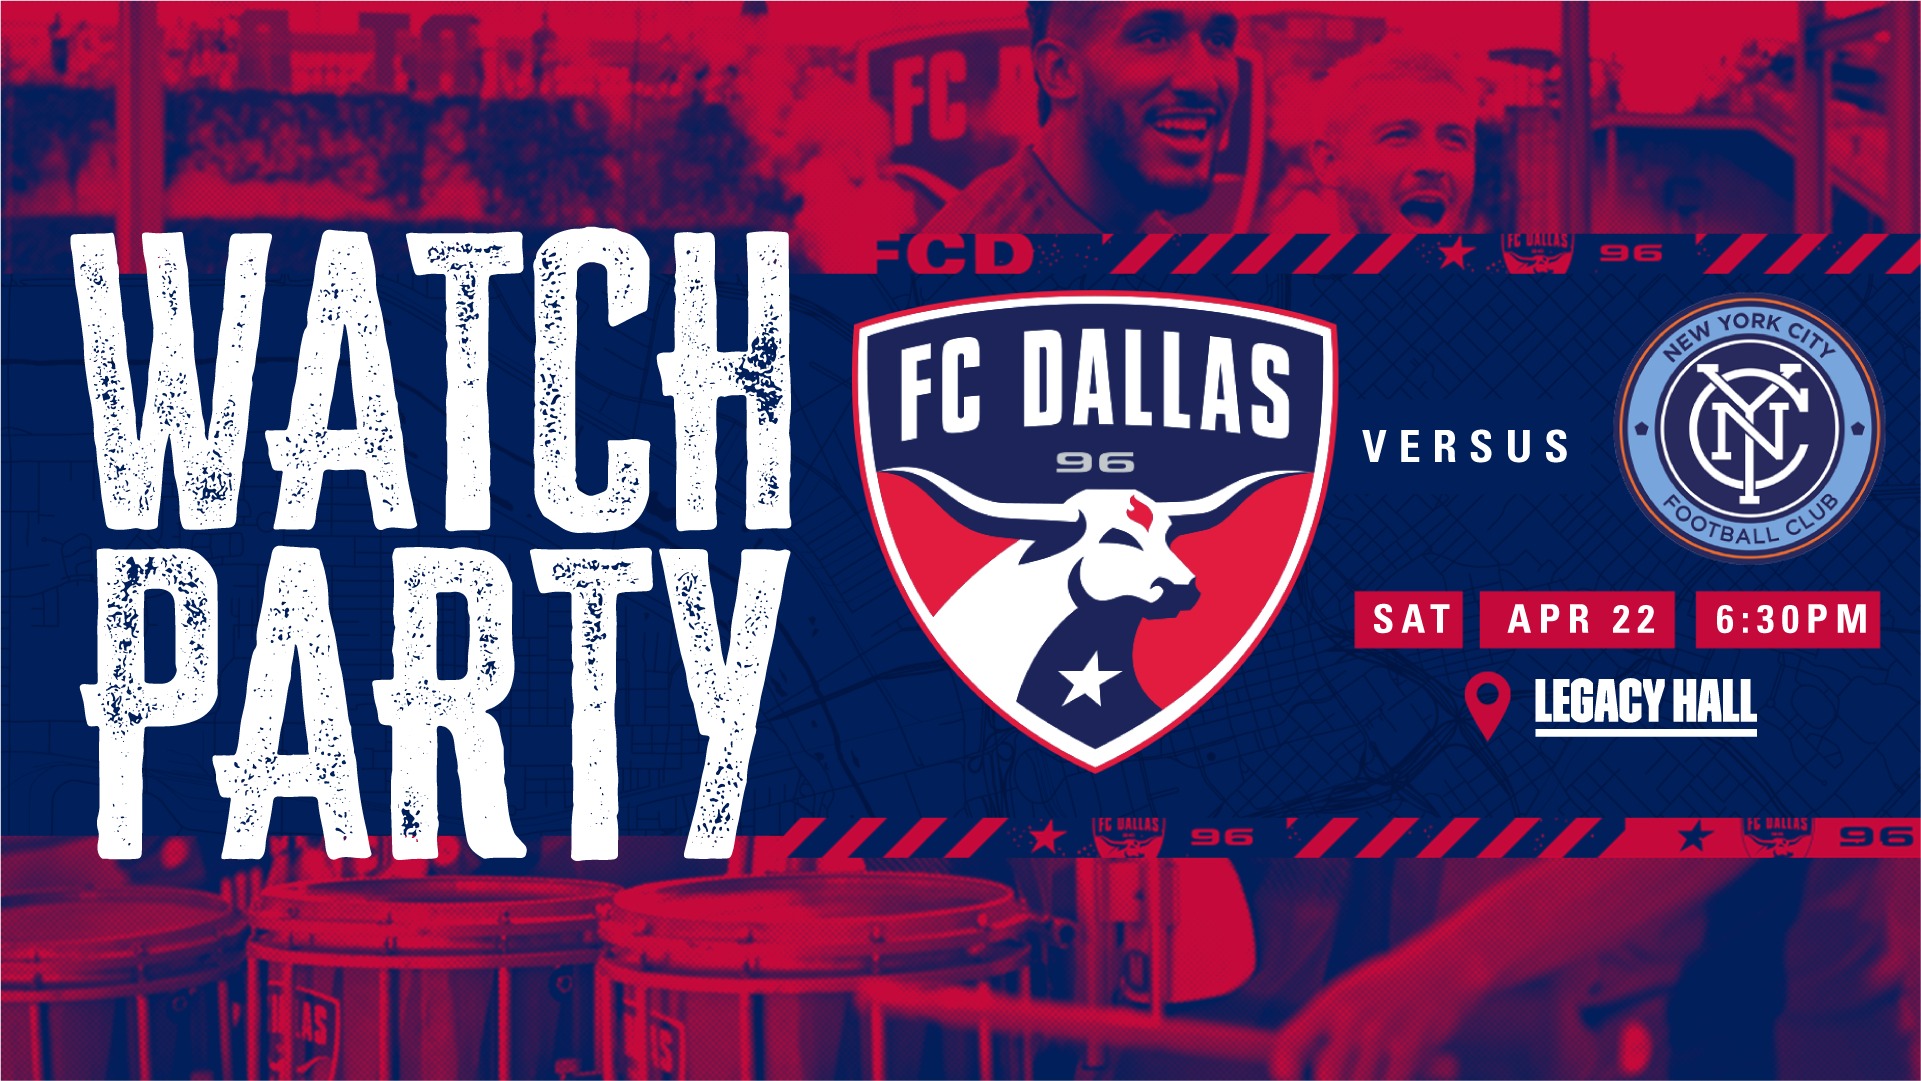 FC Dallas VS New York City Watch Party